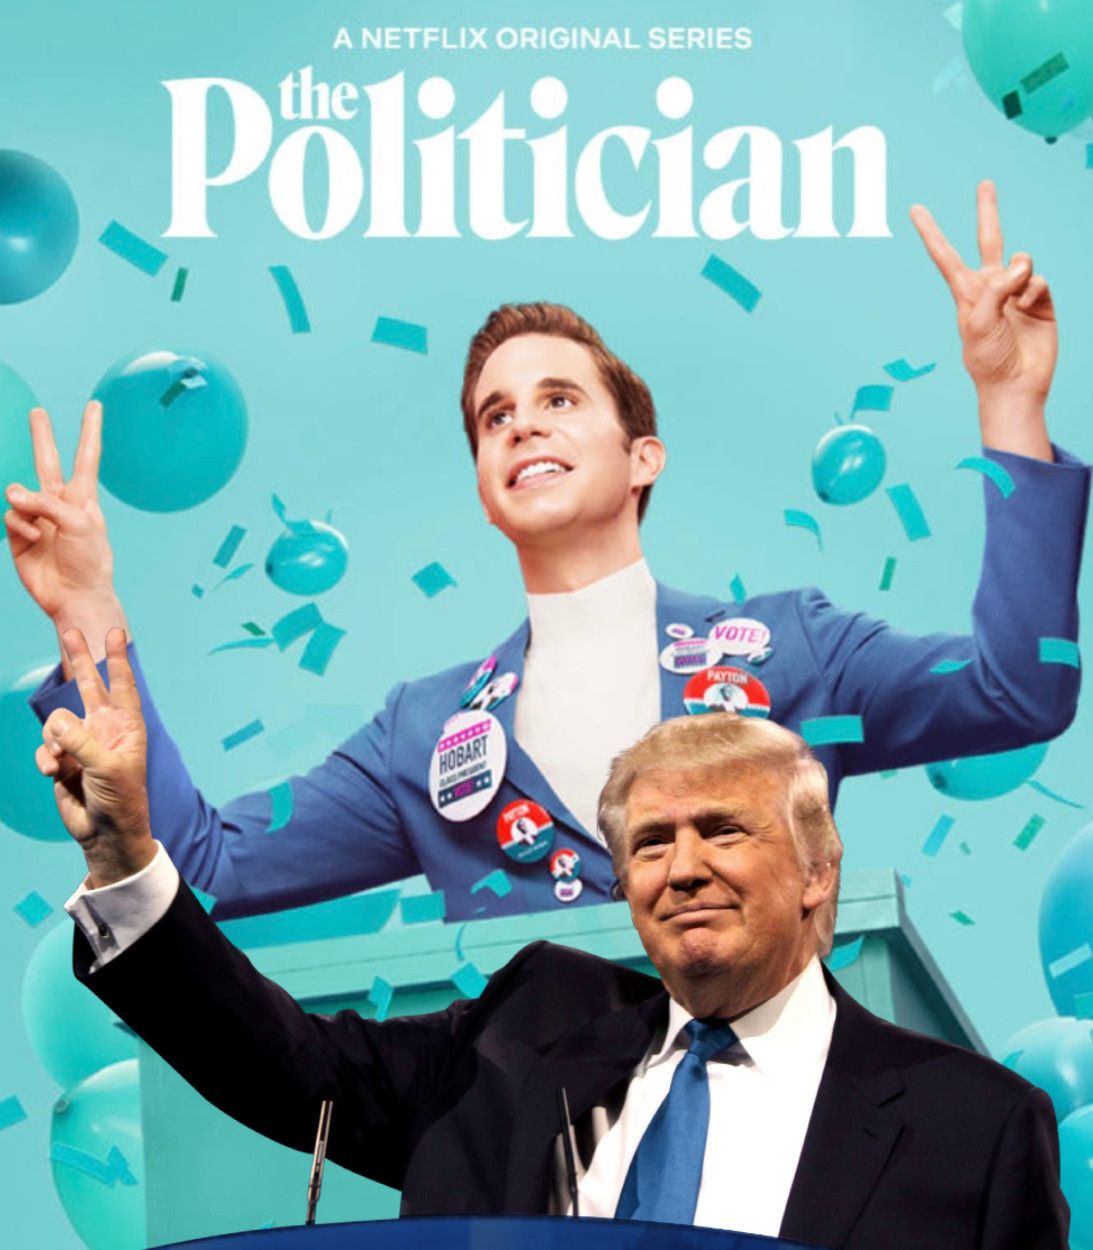 Donald Trump The Politician Poster Vertical